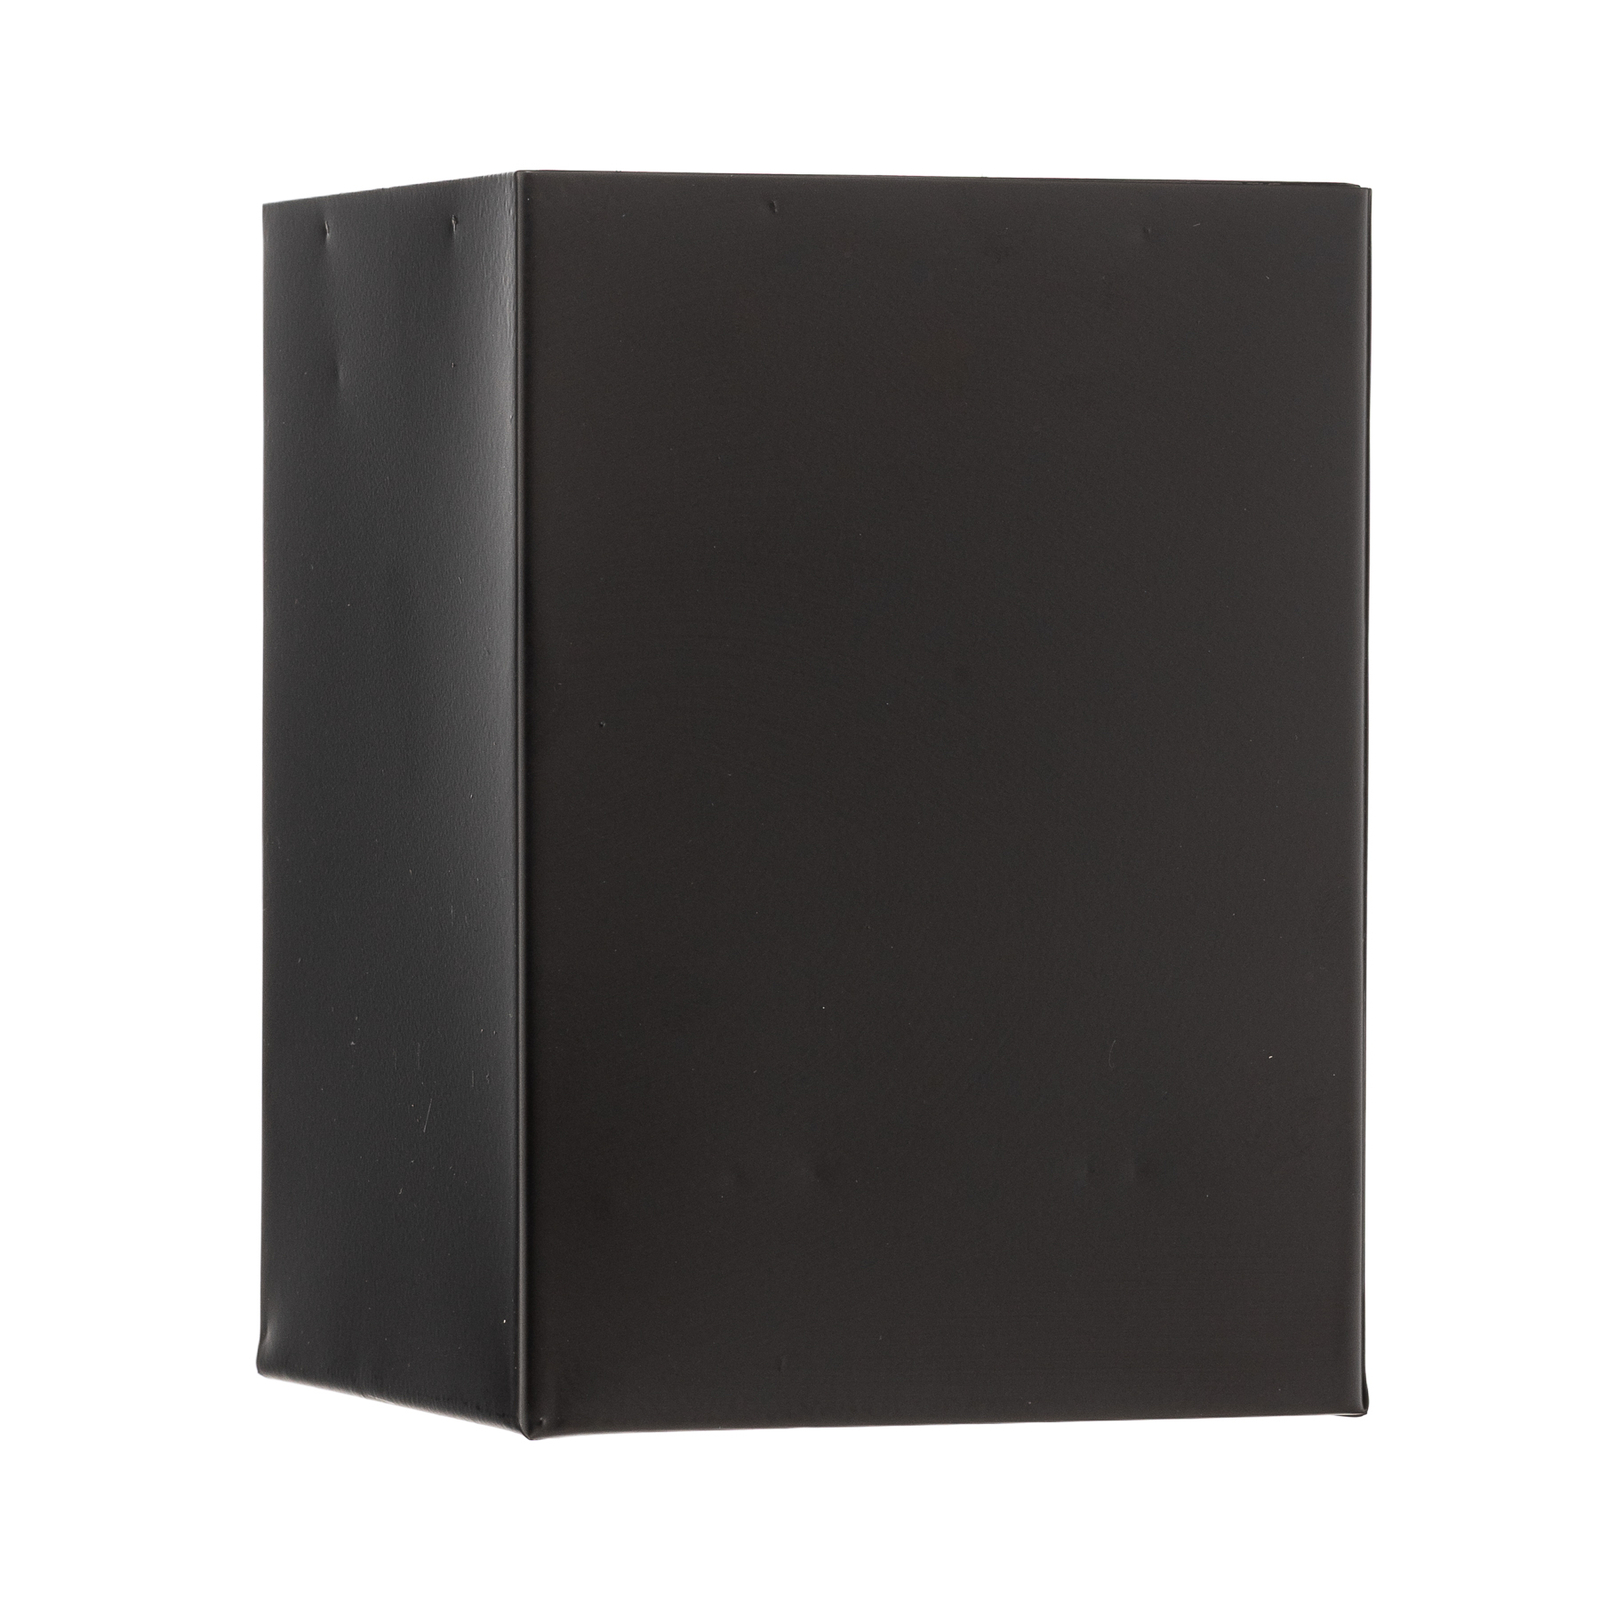 Downlight square black, width 11.5cm